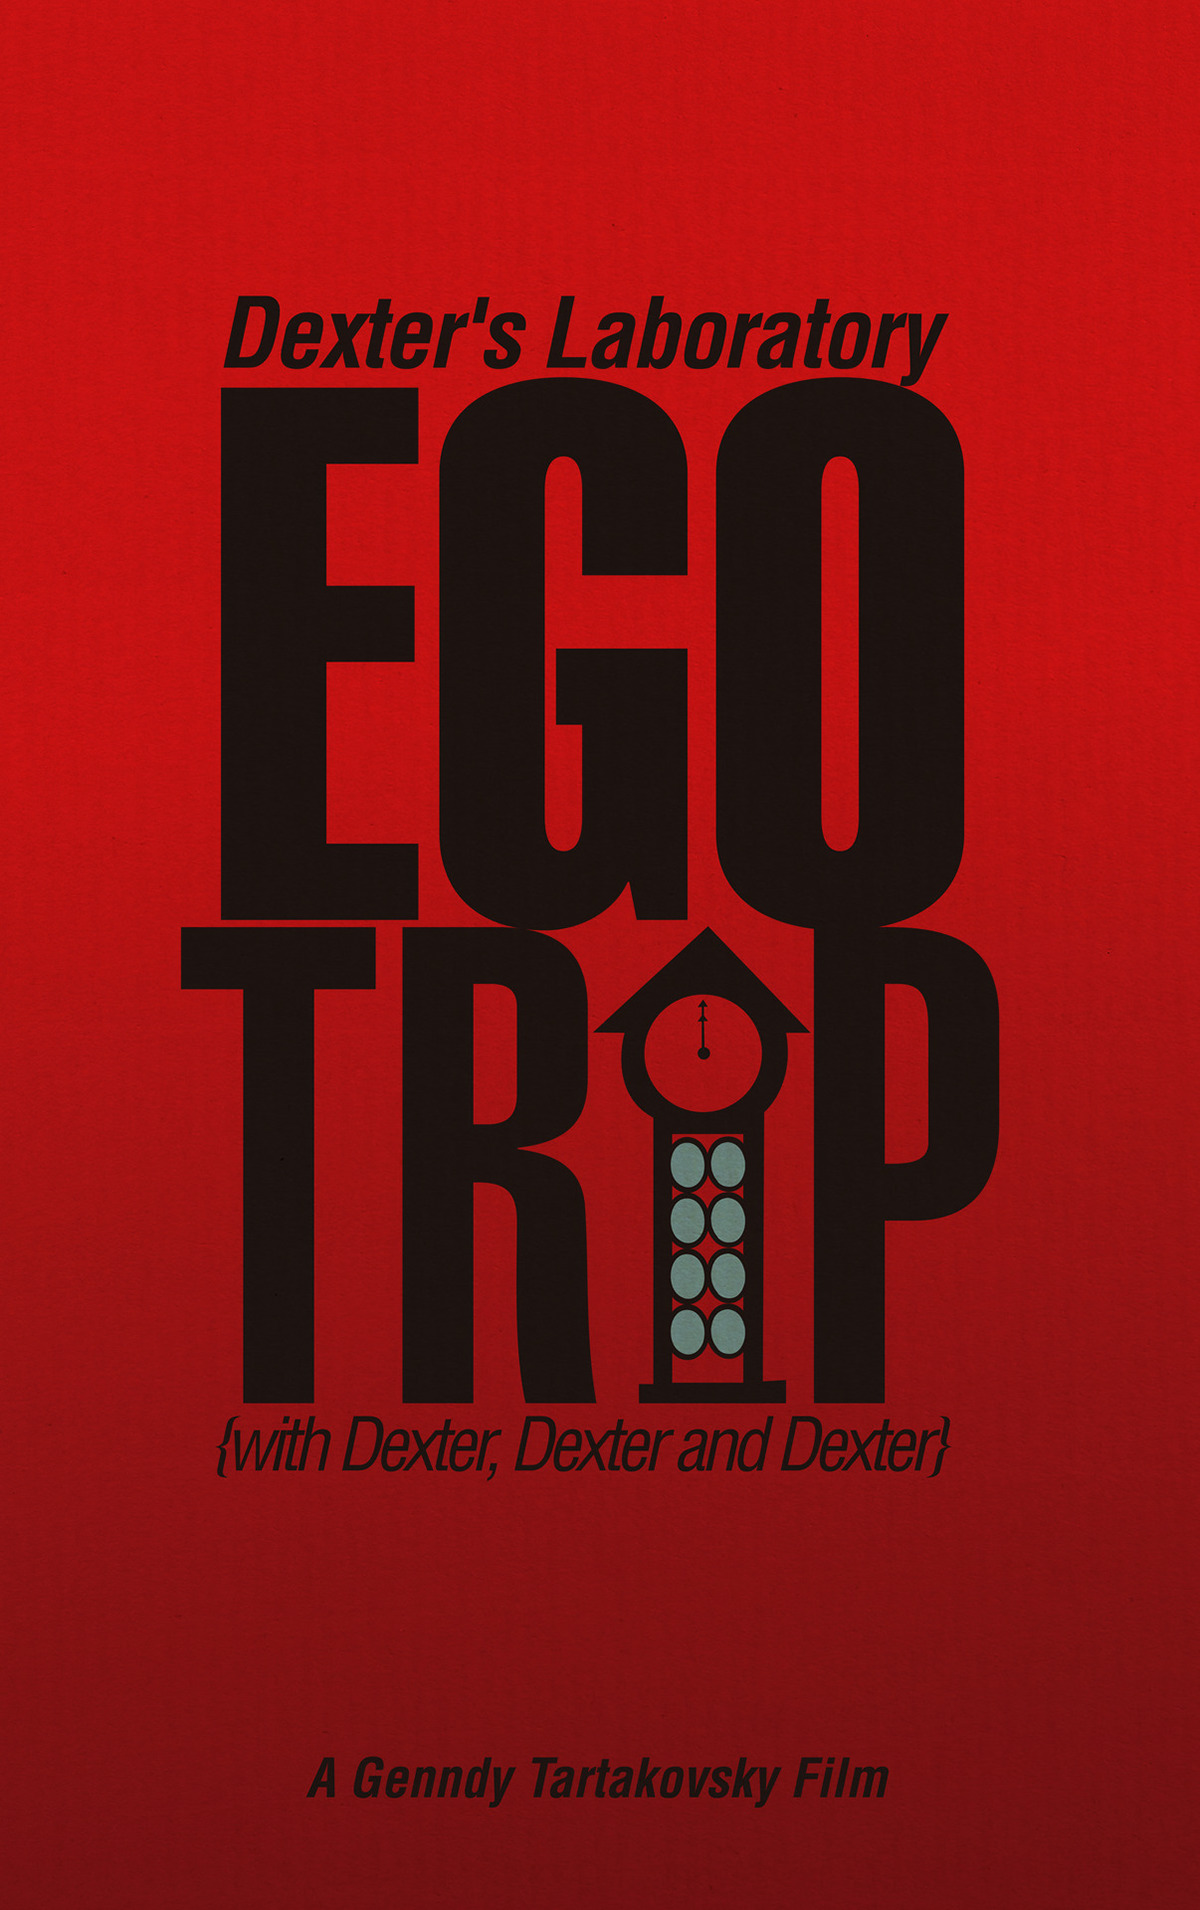 ego trip cost